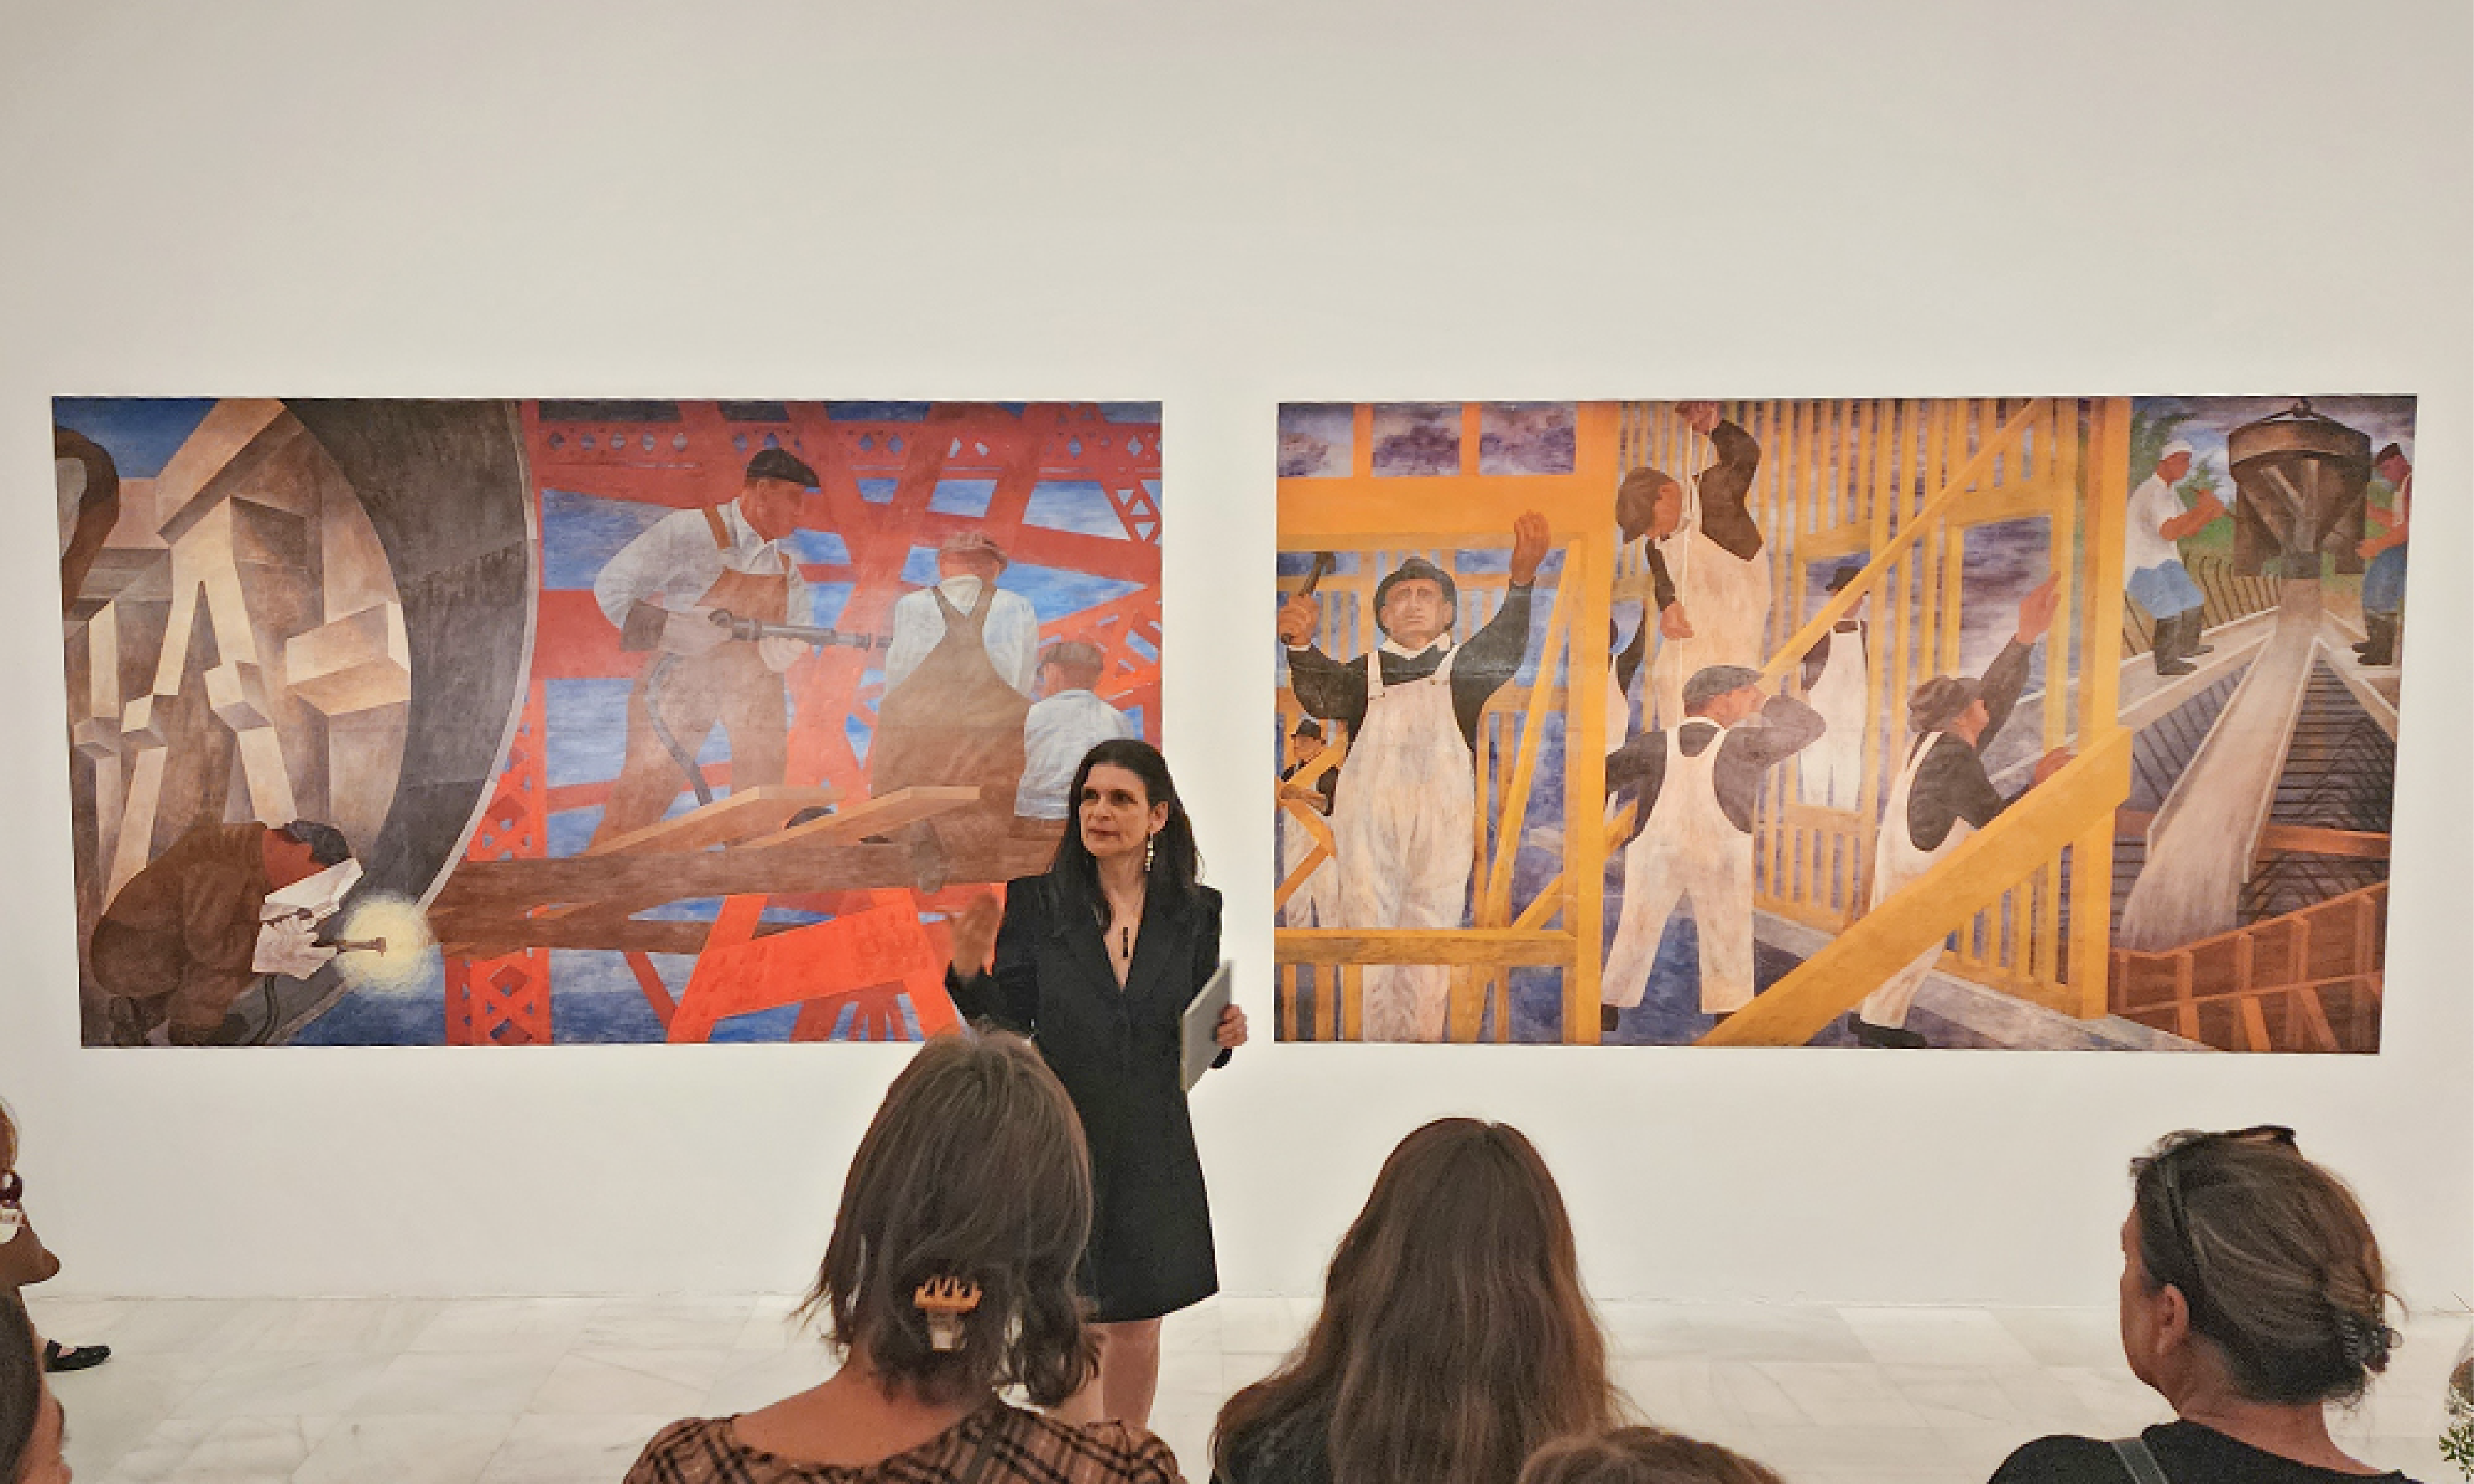 Dr. Laura Katzman leads a tour through an exhibition she curated